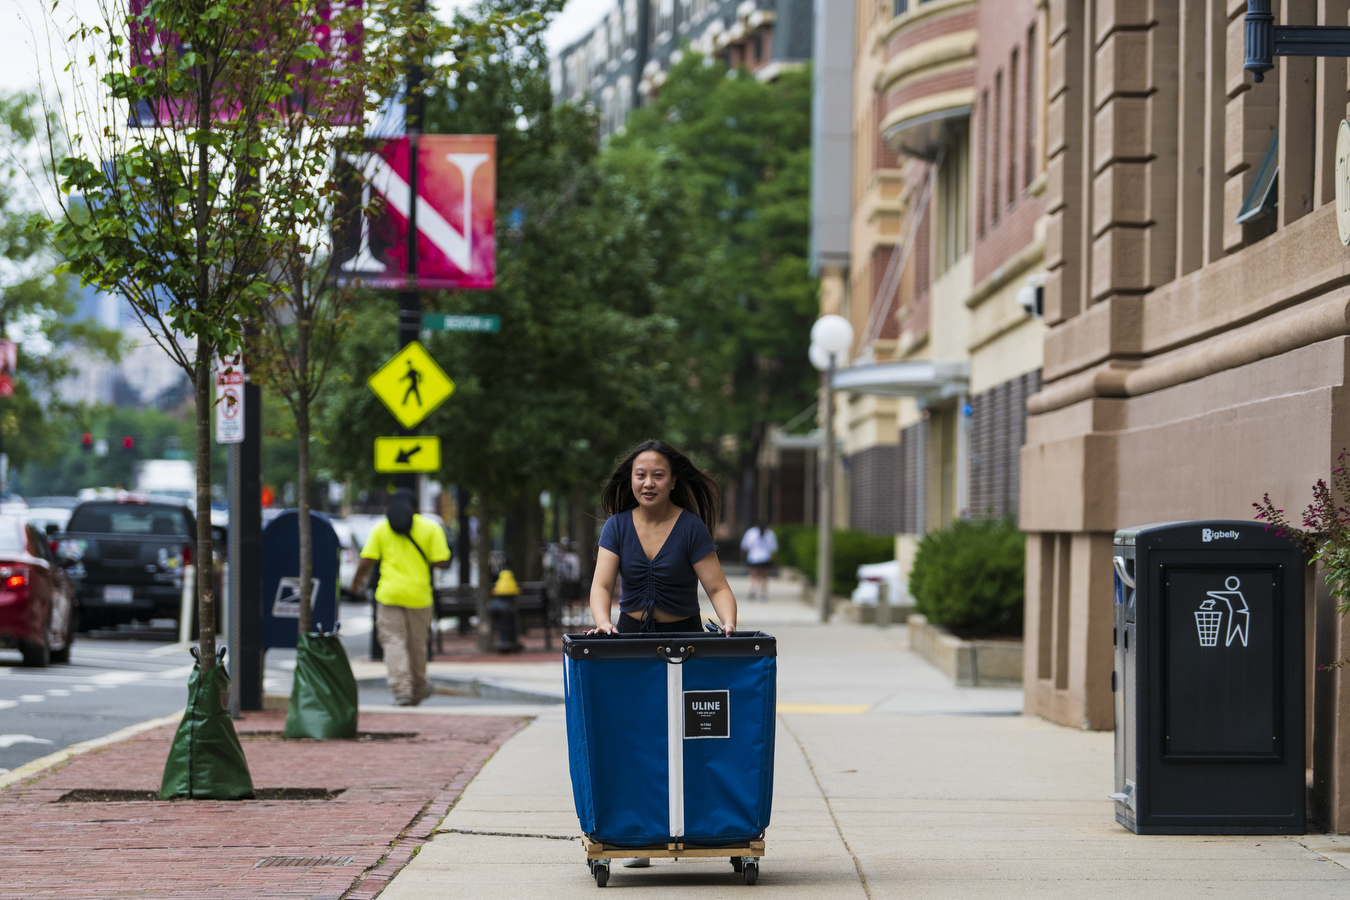 A person walks down the sidewalk towards the camera, wheeling an oversized moving bin. 